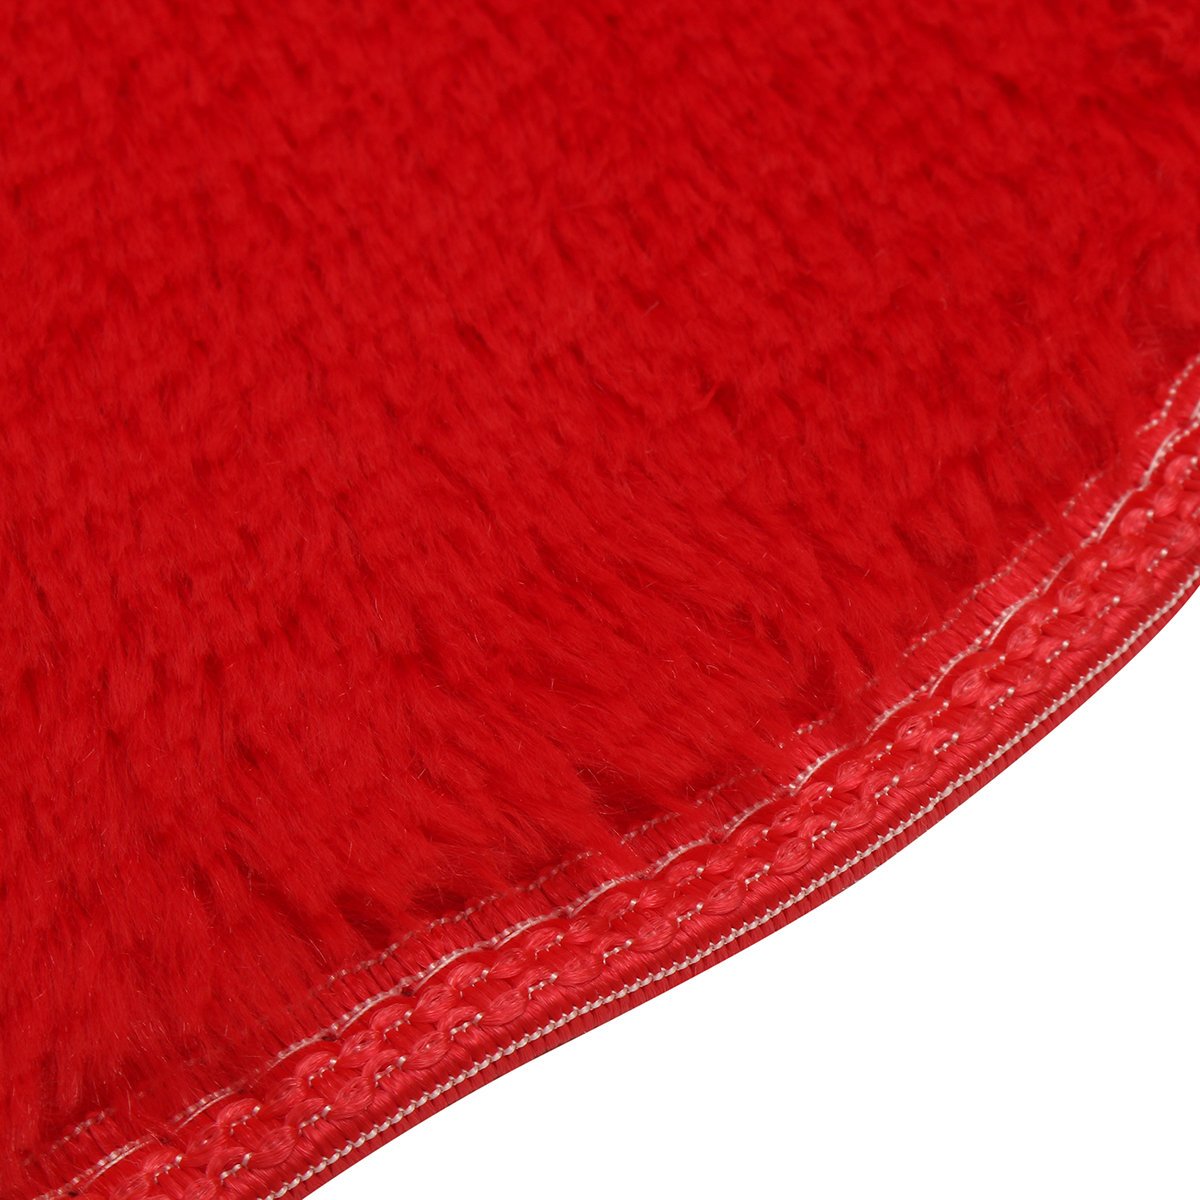 Red Round Shaggy Rug Long Hair Faux Fur Decorative Luxury Carpet Mat Rug